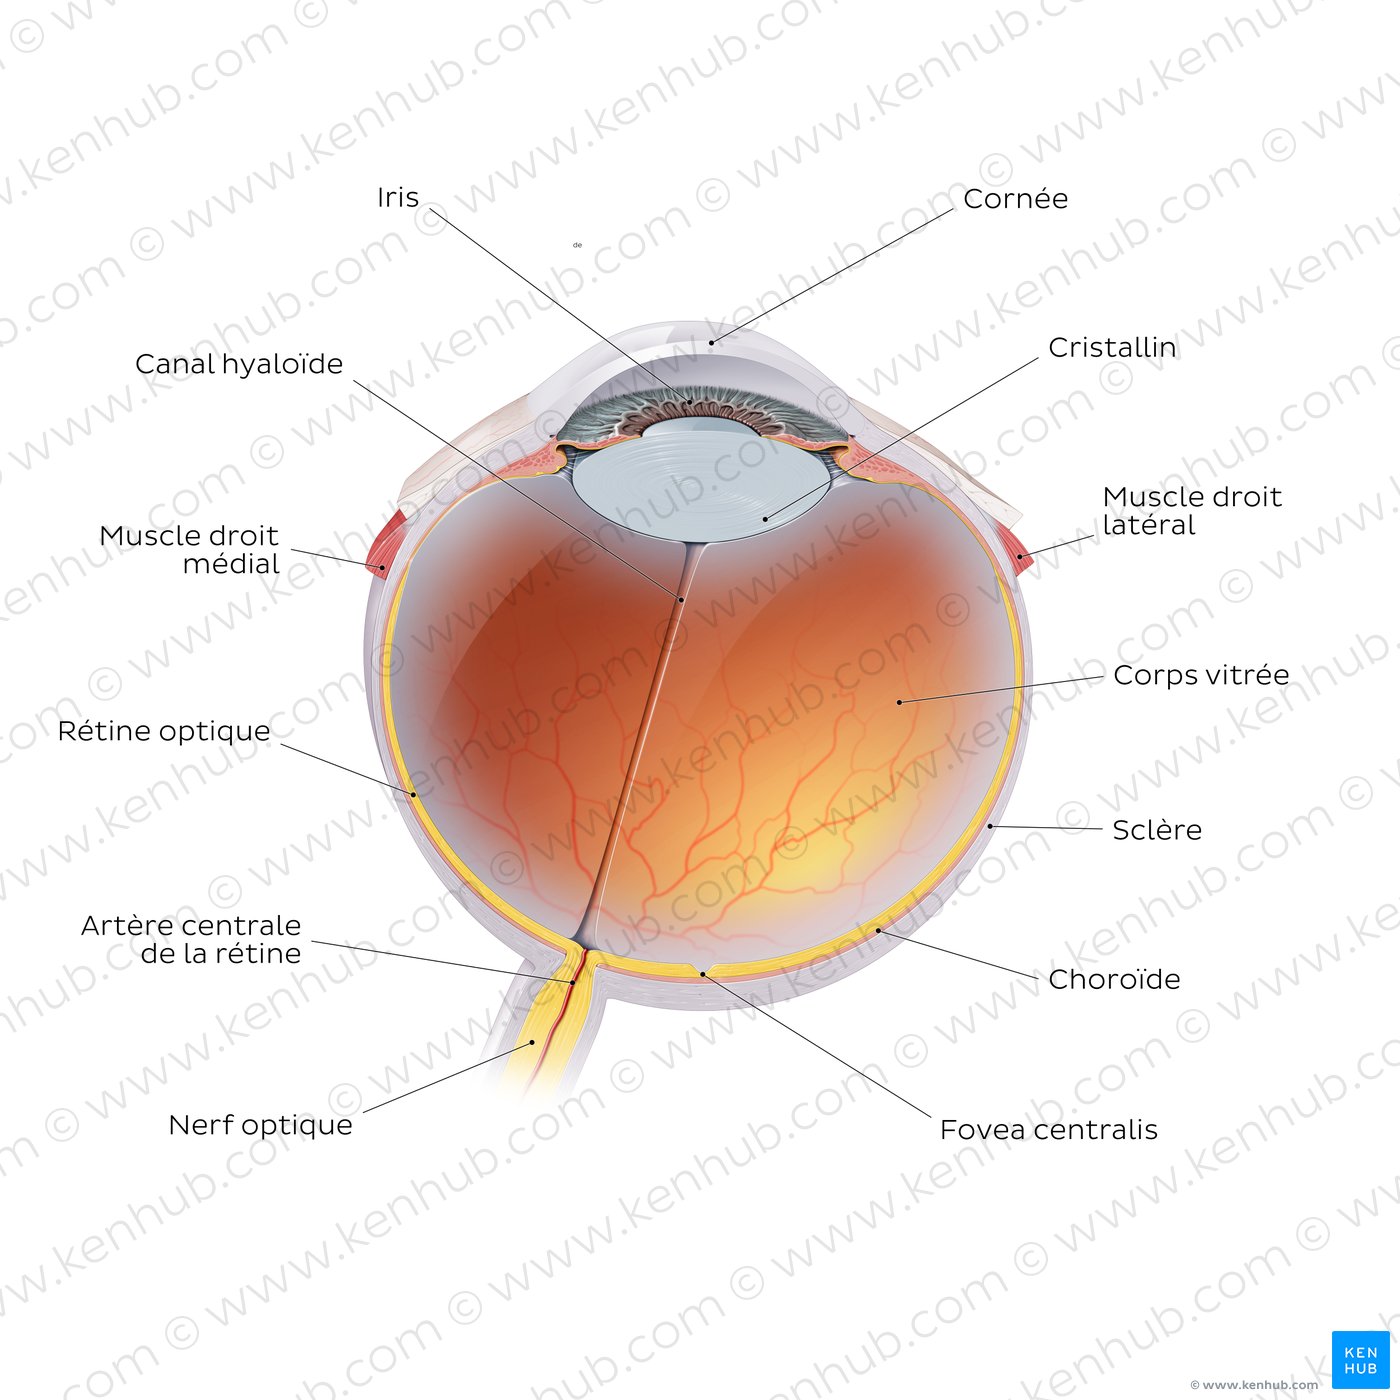 Anatomie de l'œil (schéma)